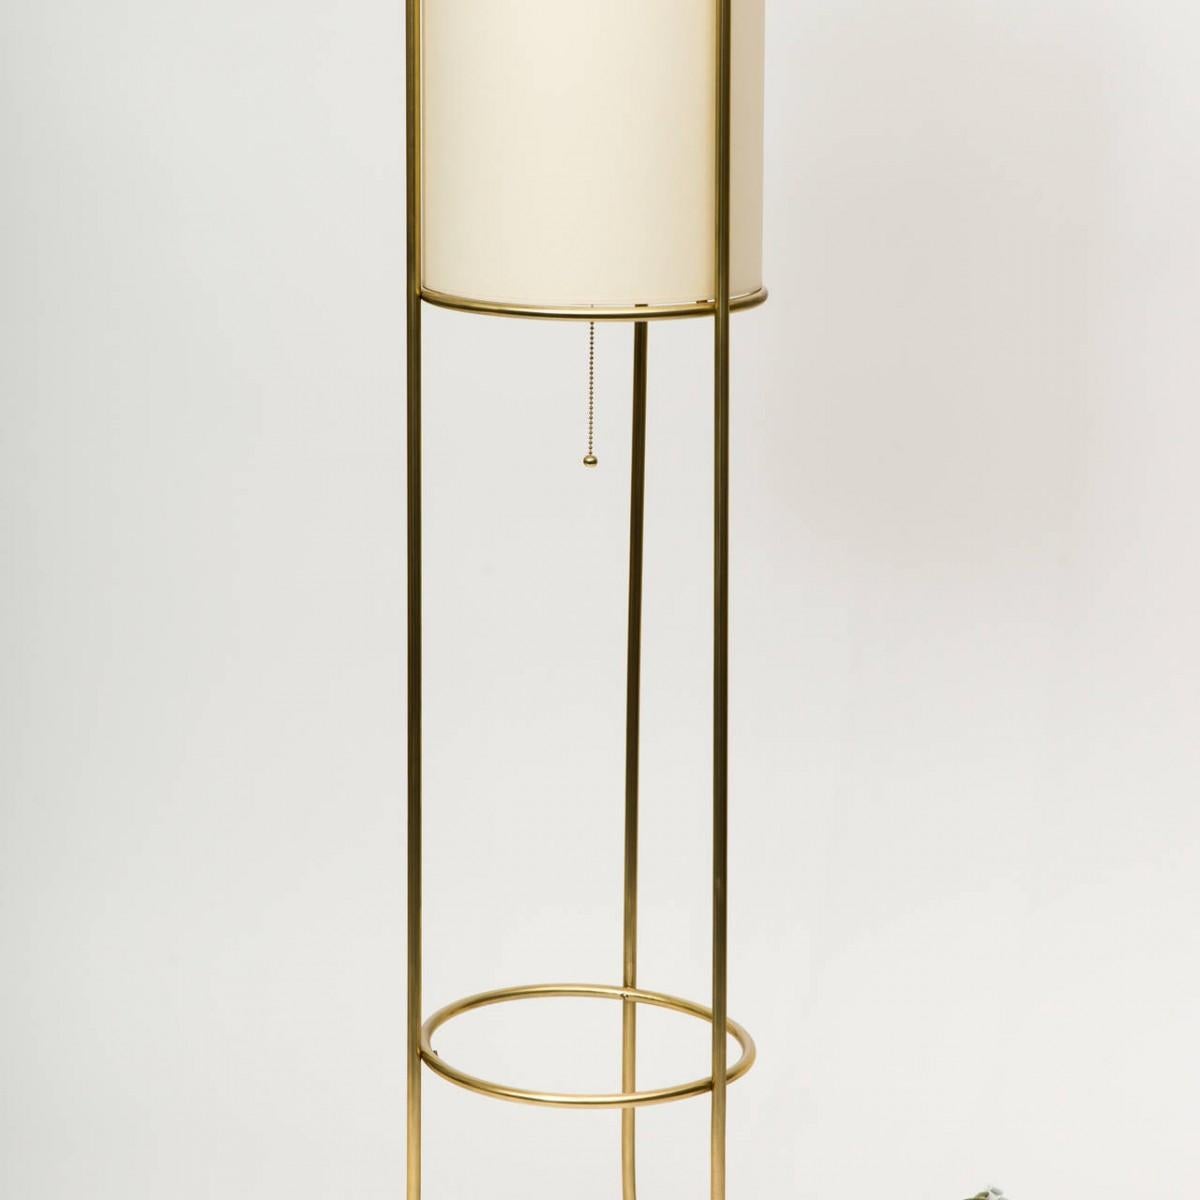 American Pair of Tripod Brass Floor Lamps in the Manner of T.H. Robsjohn-Gibbings For Sale